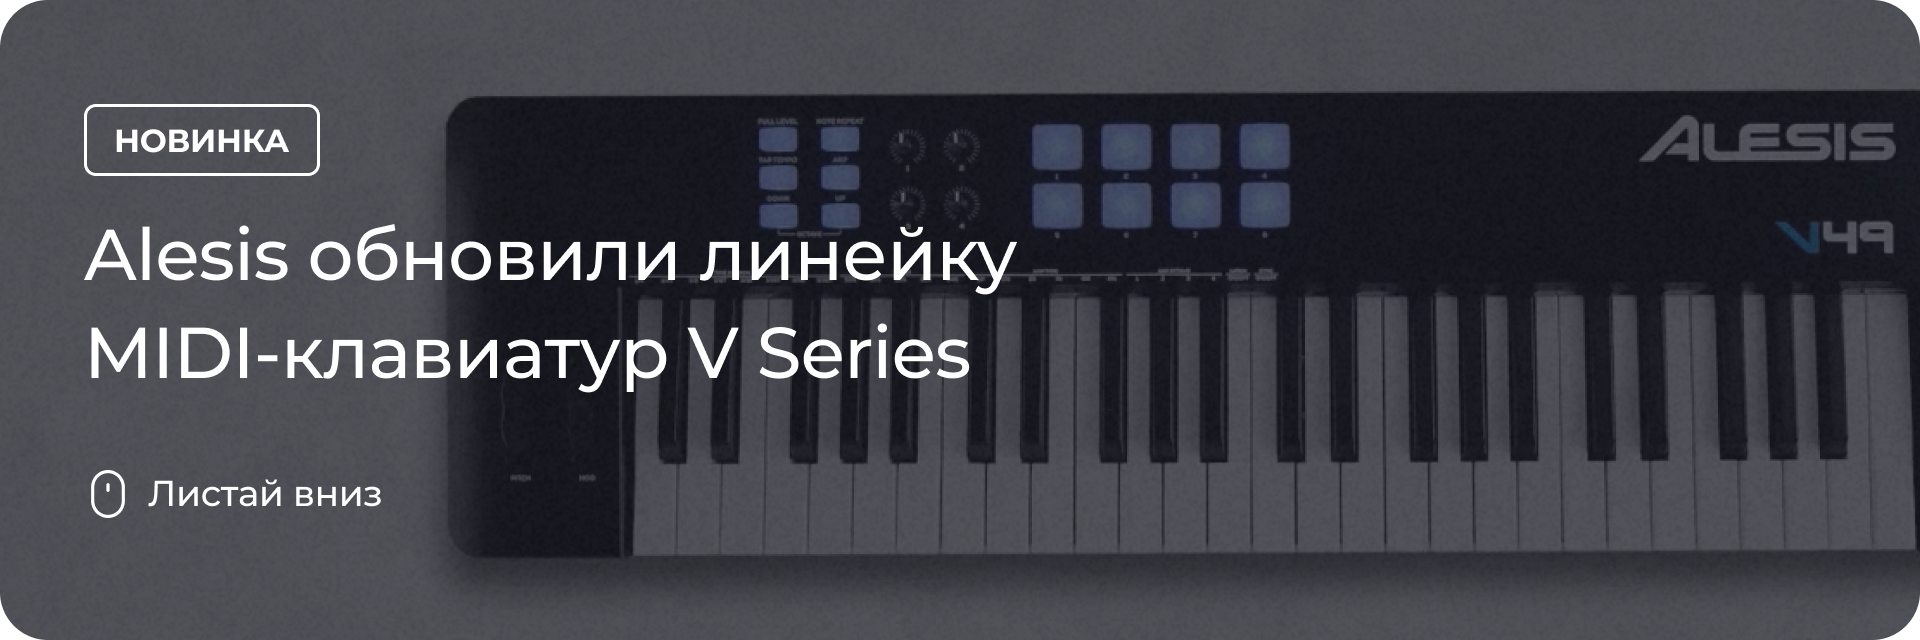 Alesis обновили линейку MIDI-клавиатур V Series